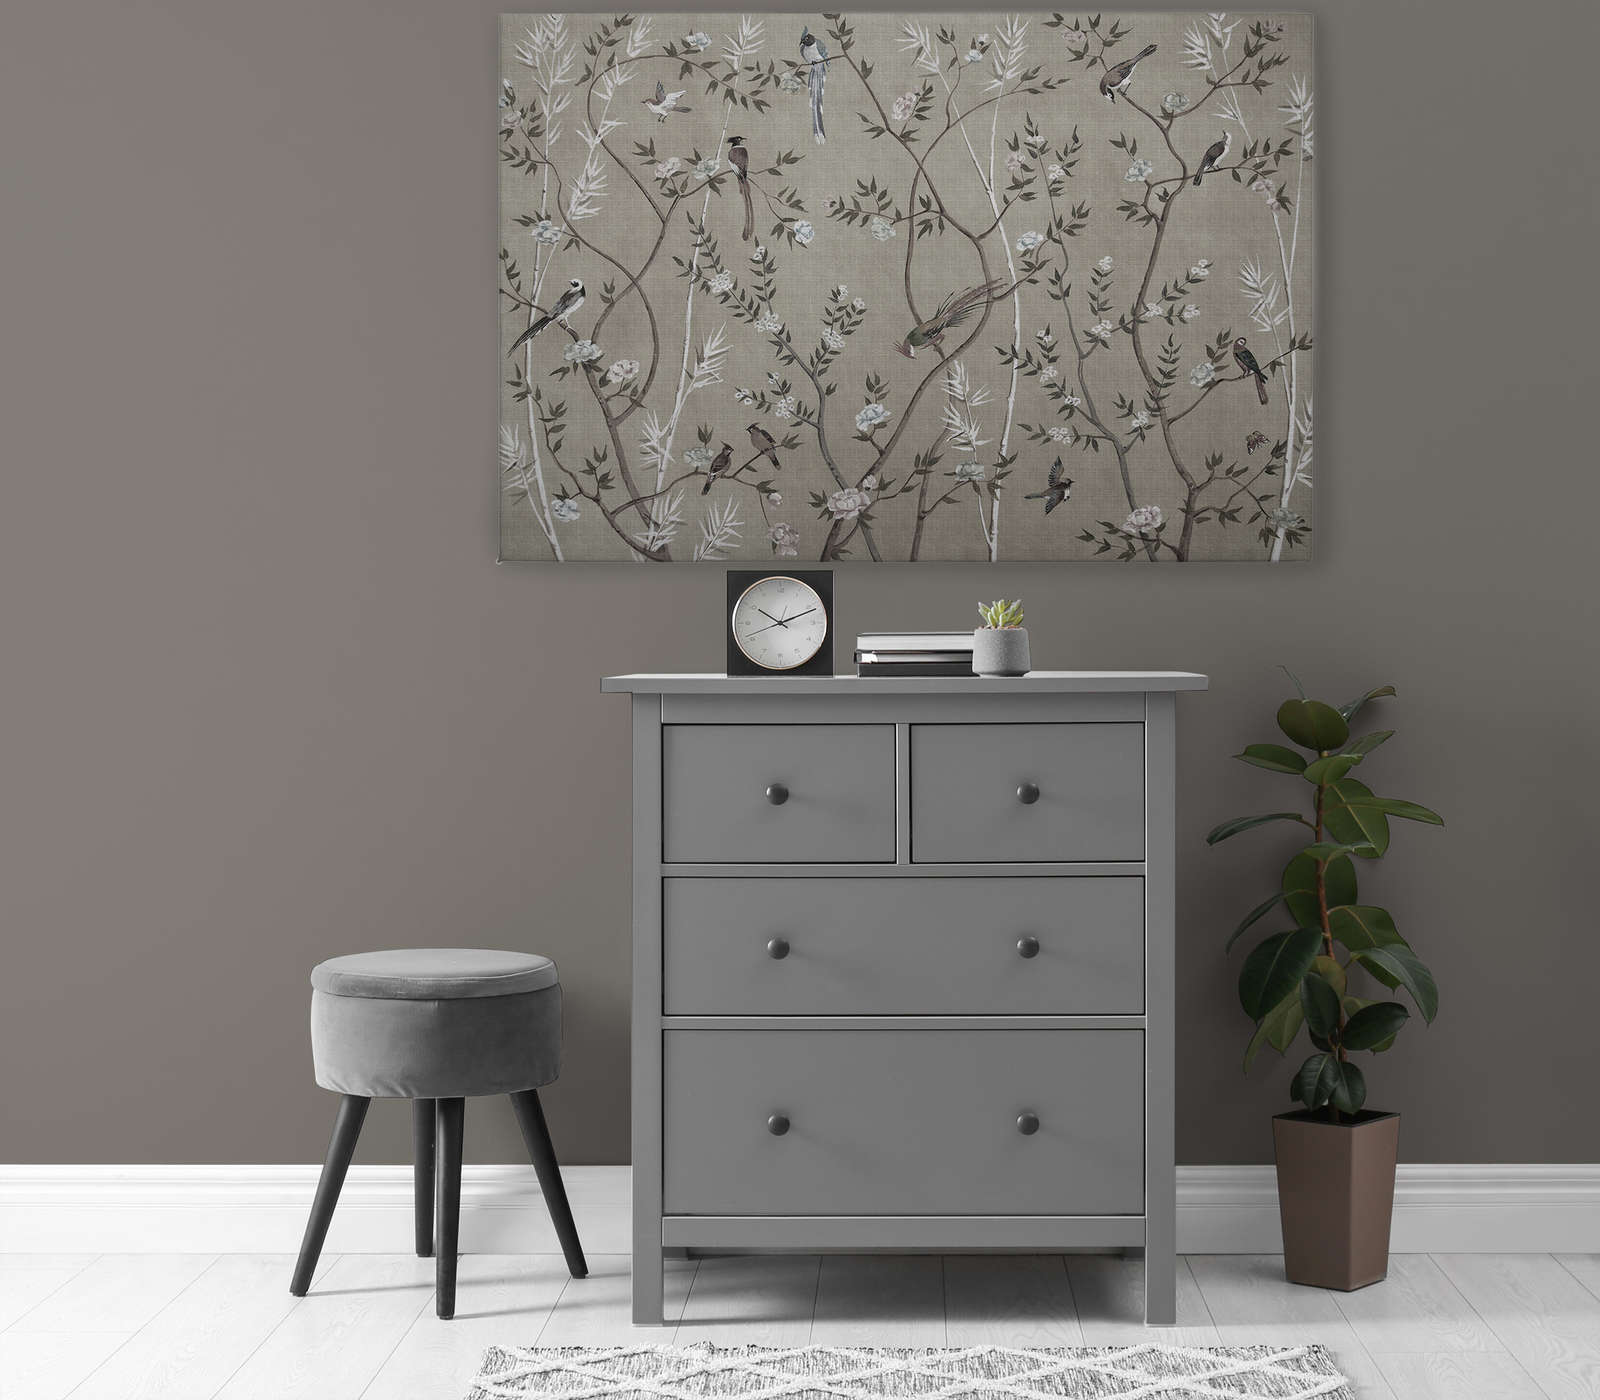             Tea Room 2 - Canvas painting Birds & Flowers Design in Greige - 1,20 m x 0,80 m
        